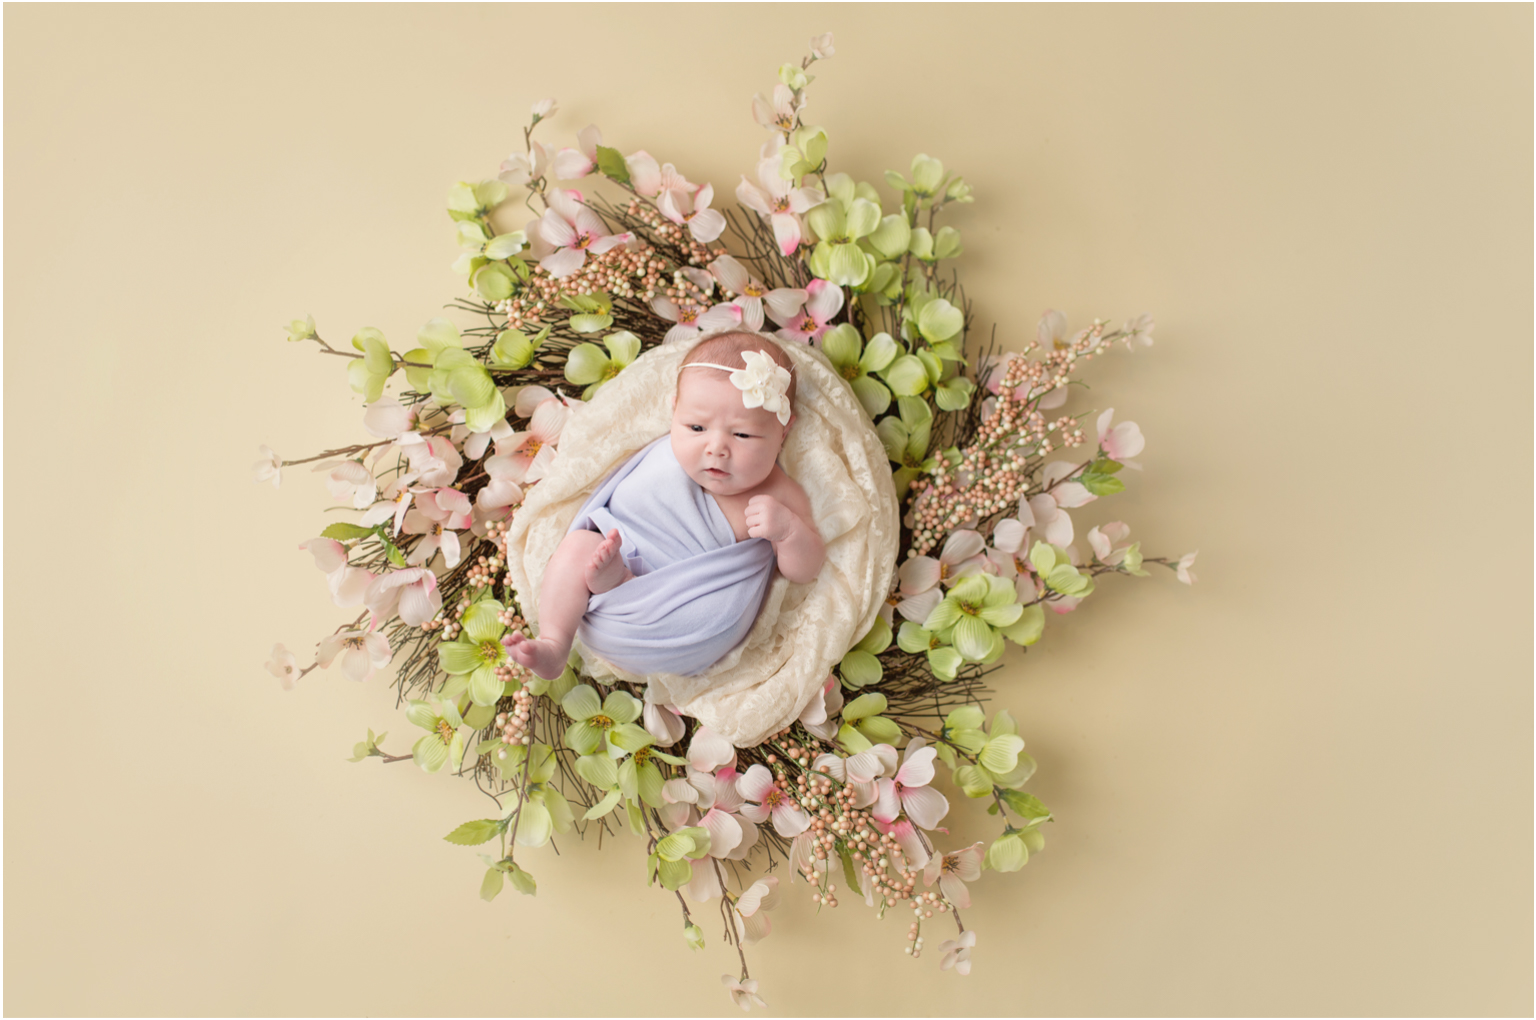 Baby Amia wreath digital backdrop photoshop skills